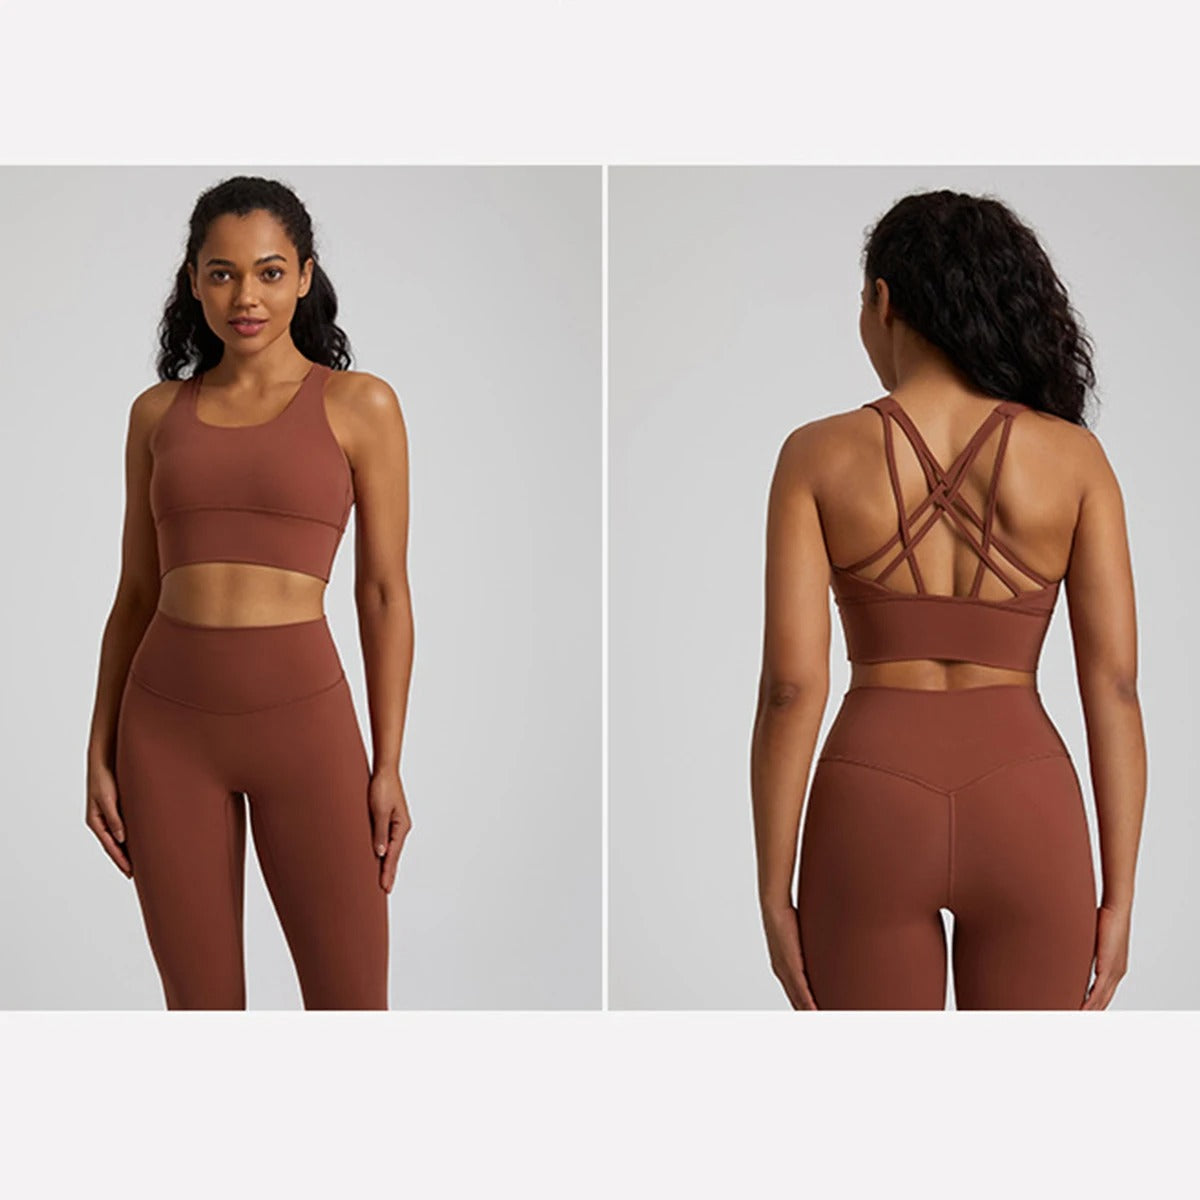 brown sports bra and leggings set